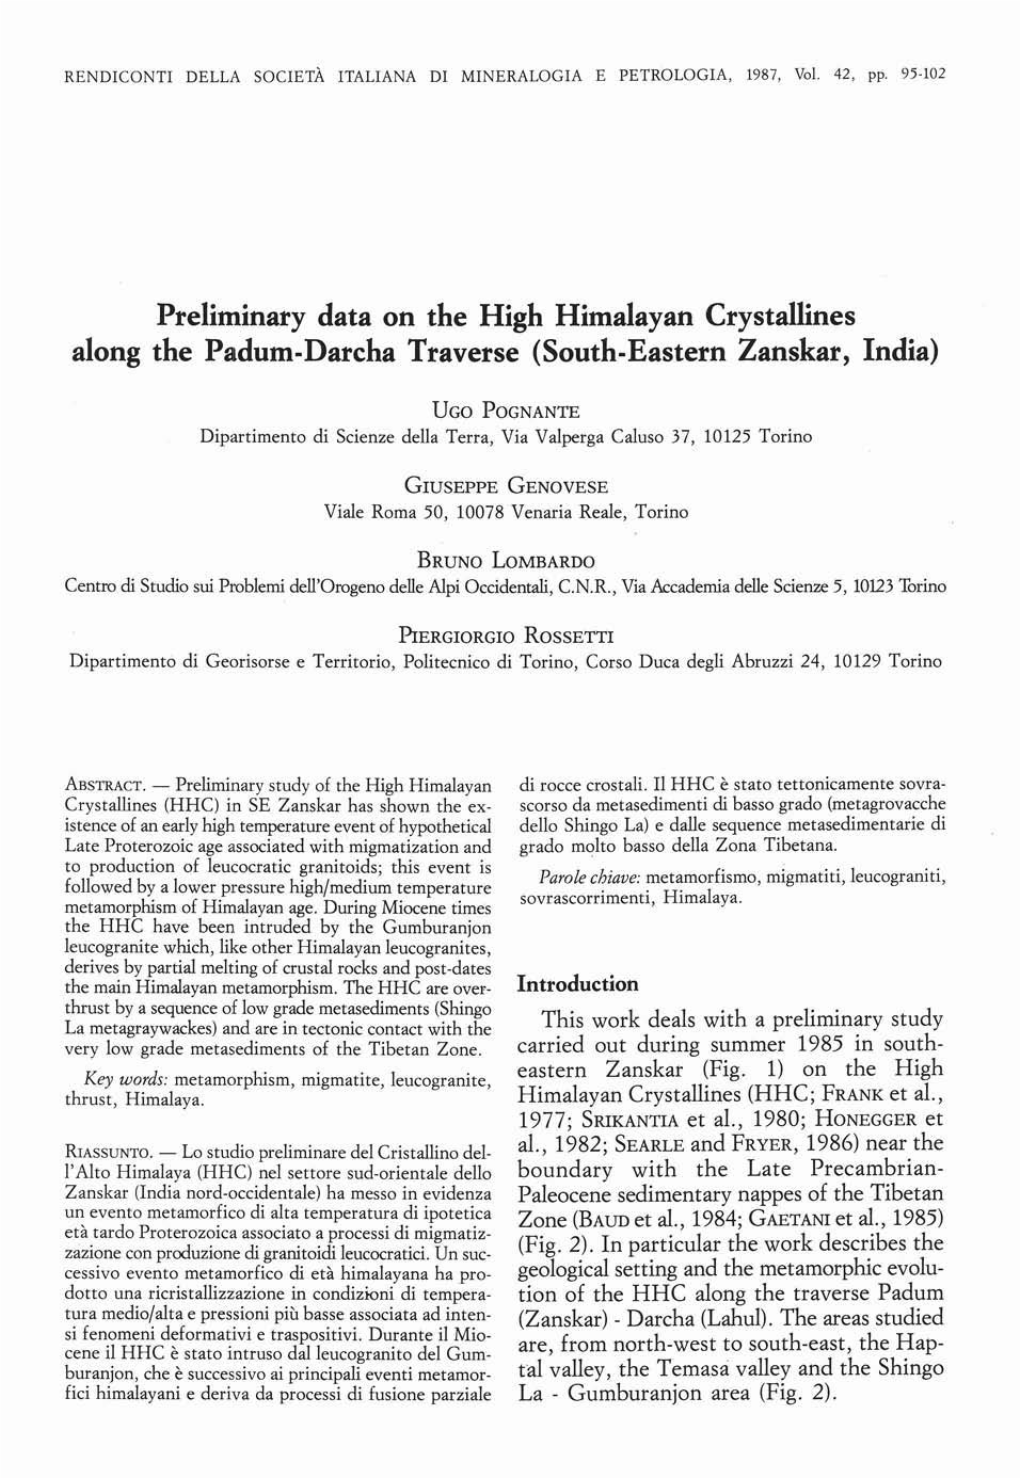 Preliminary Data on the High Himalayan Crystallines Along the Padum-Darcha Traverse (South-Eastern Zanskar, India)